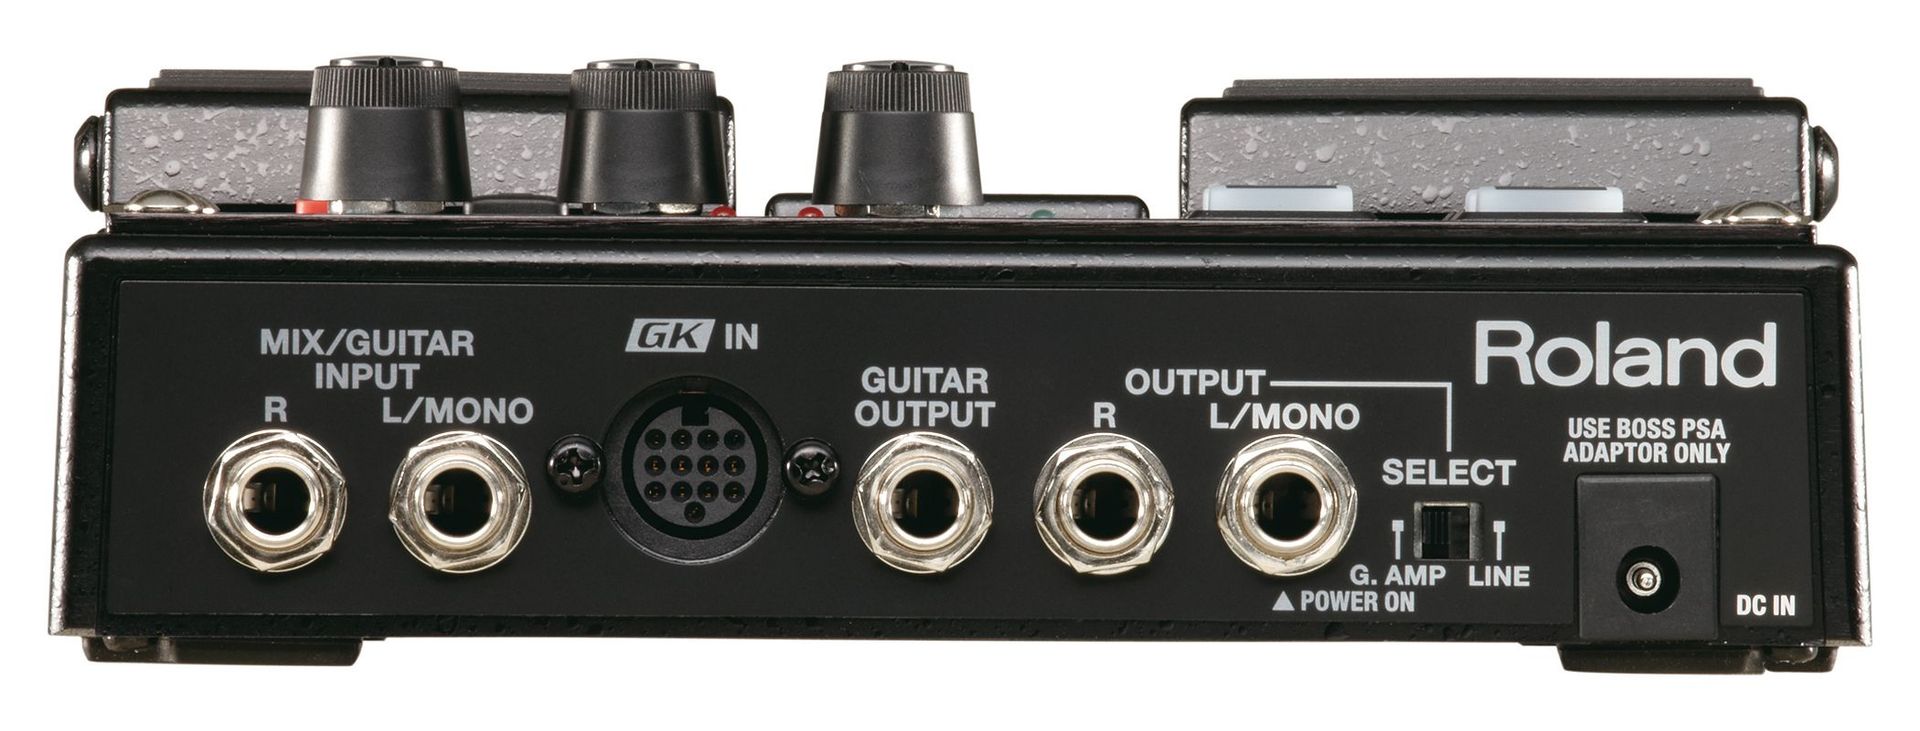 Roland GR-S  V-Guitar Space  Twin Pedal für E-Gitarre mit GK-Pickup